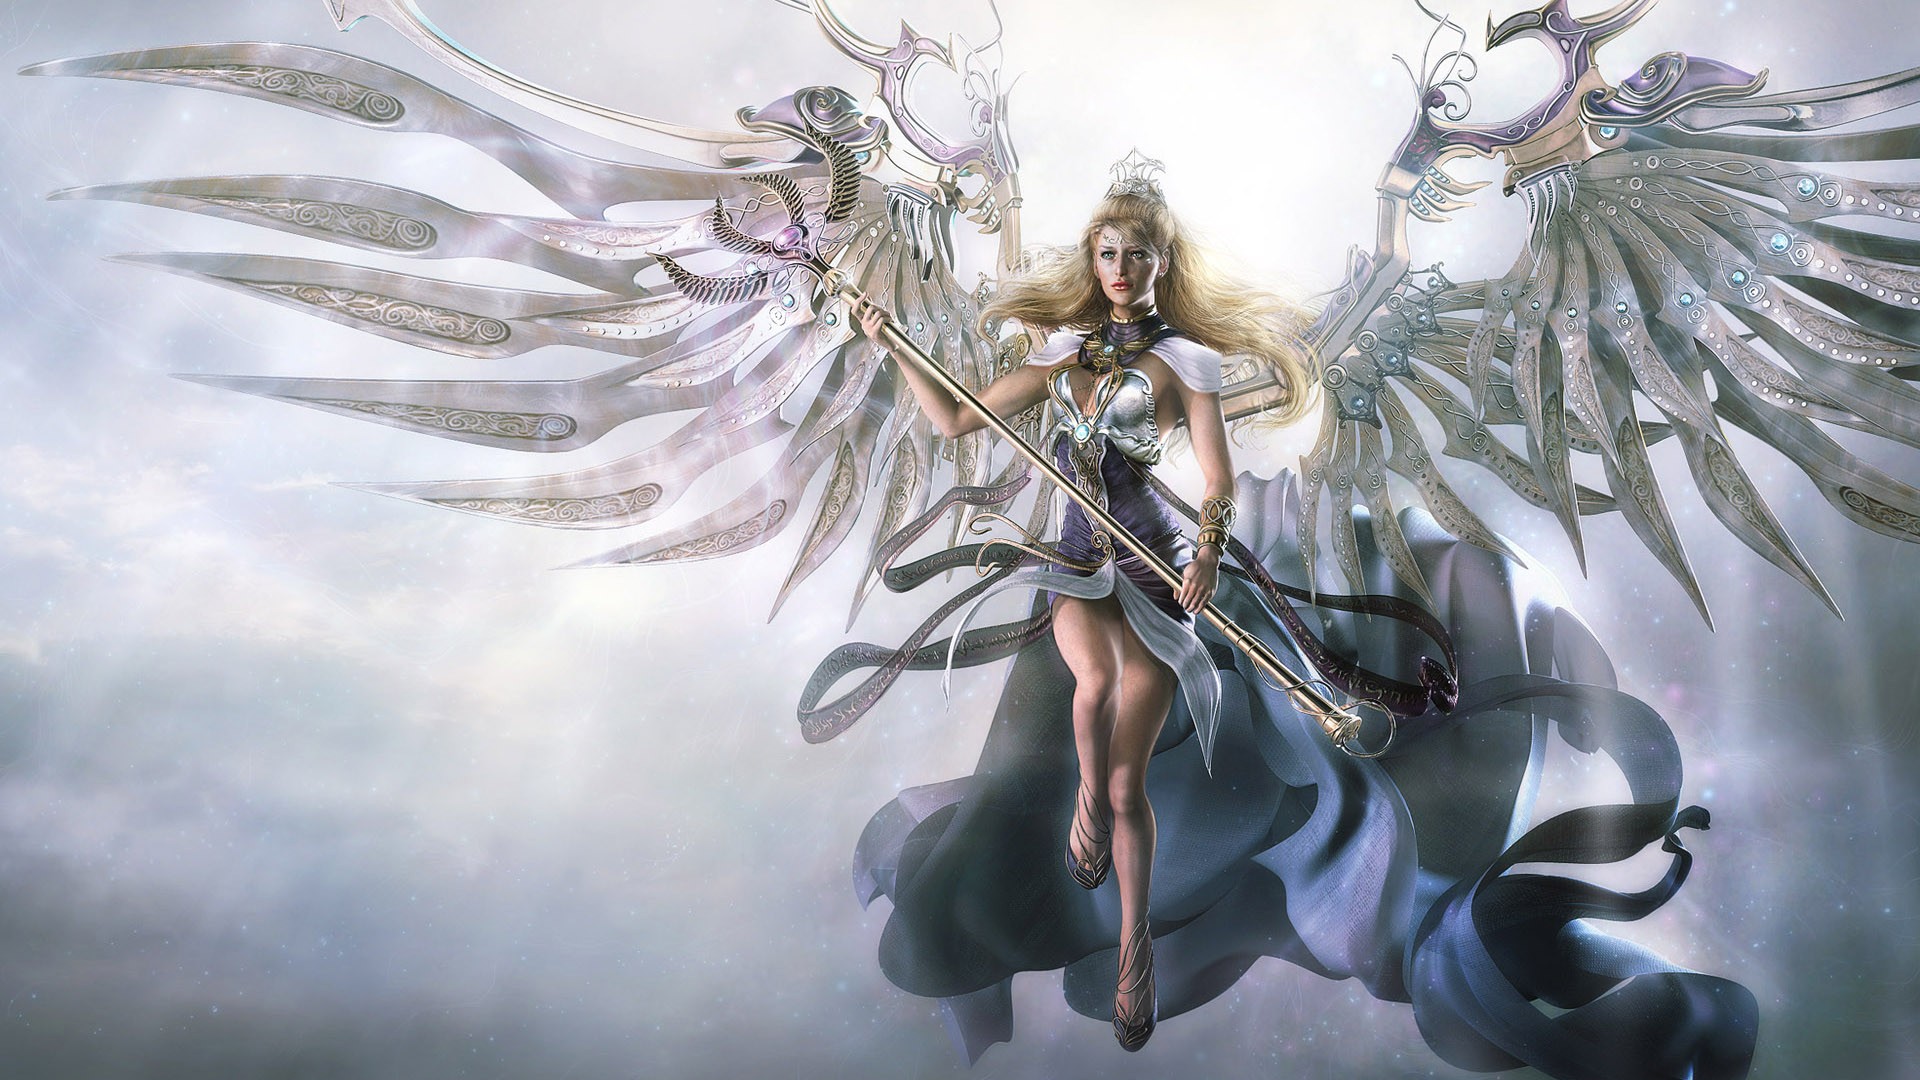 General 1920x1080 angel fictional fantasy art artwork women staff fantasy girl wings blonde legs together long hair legs